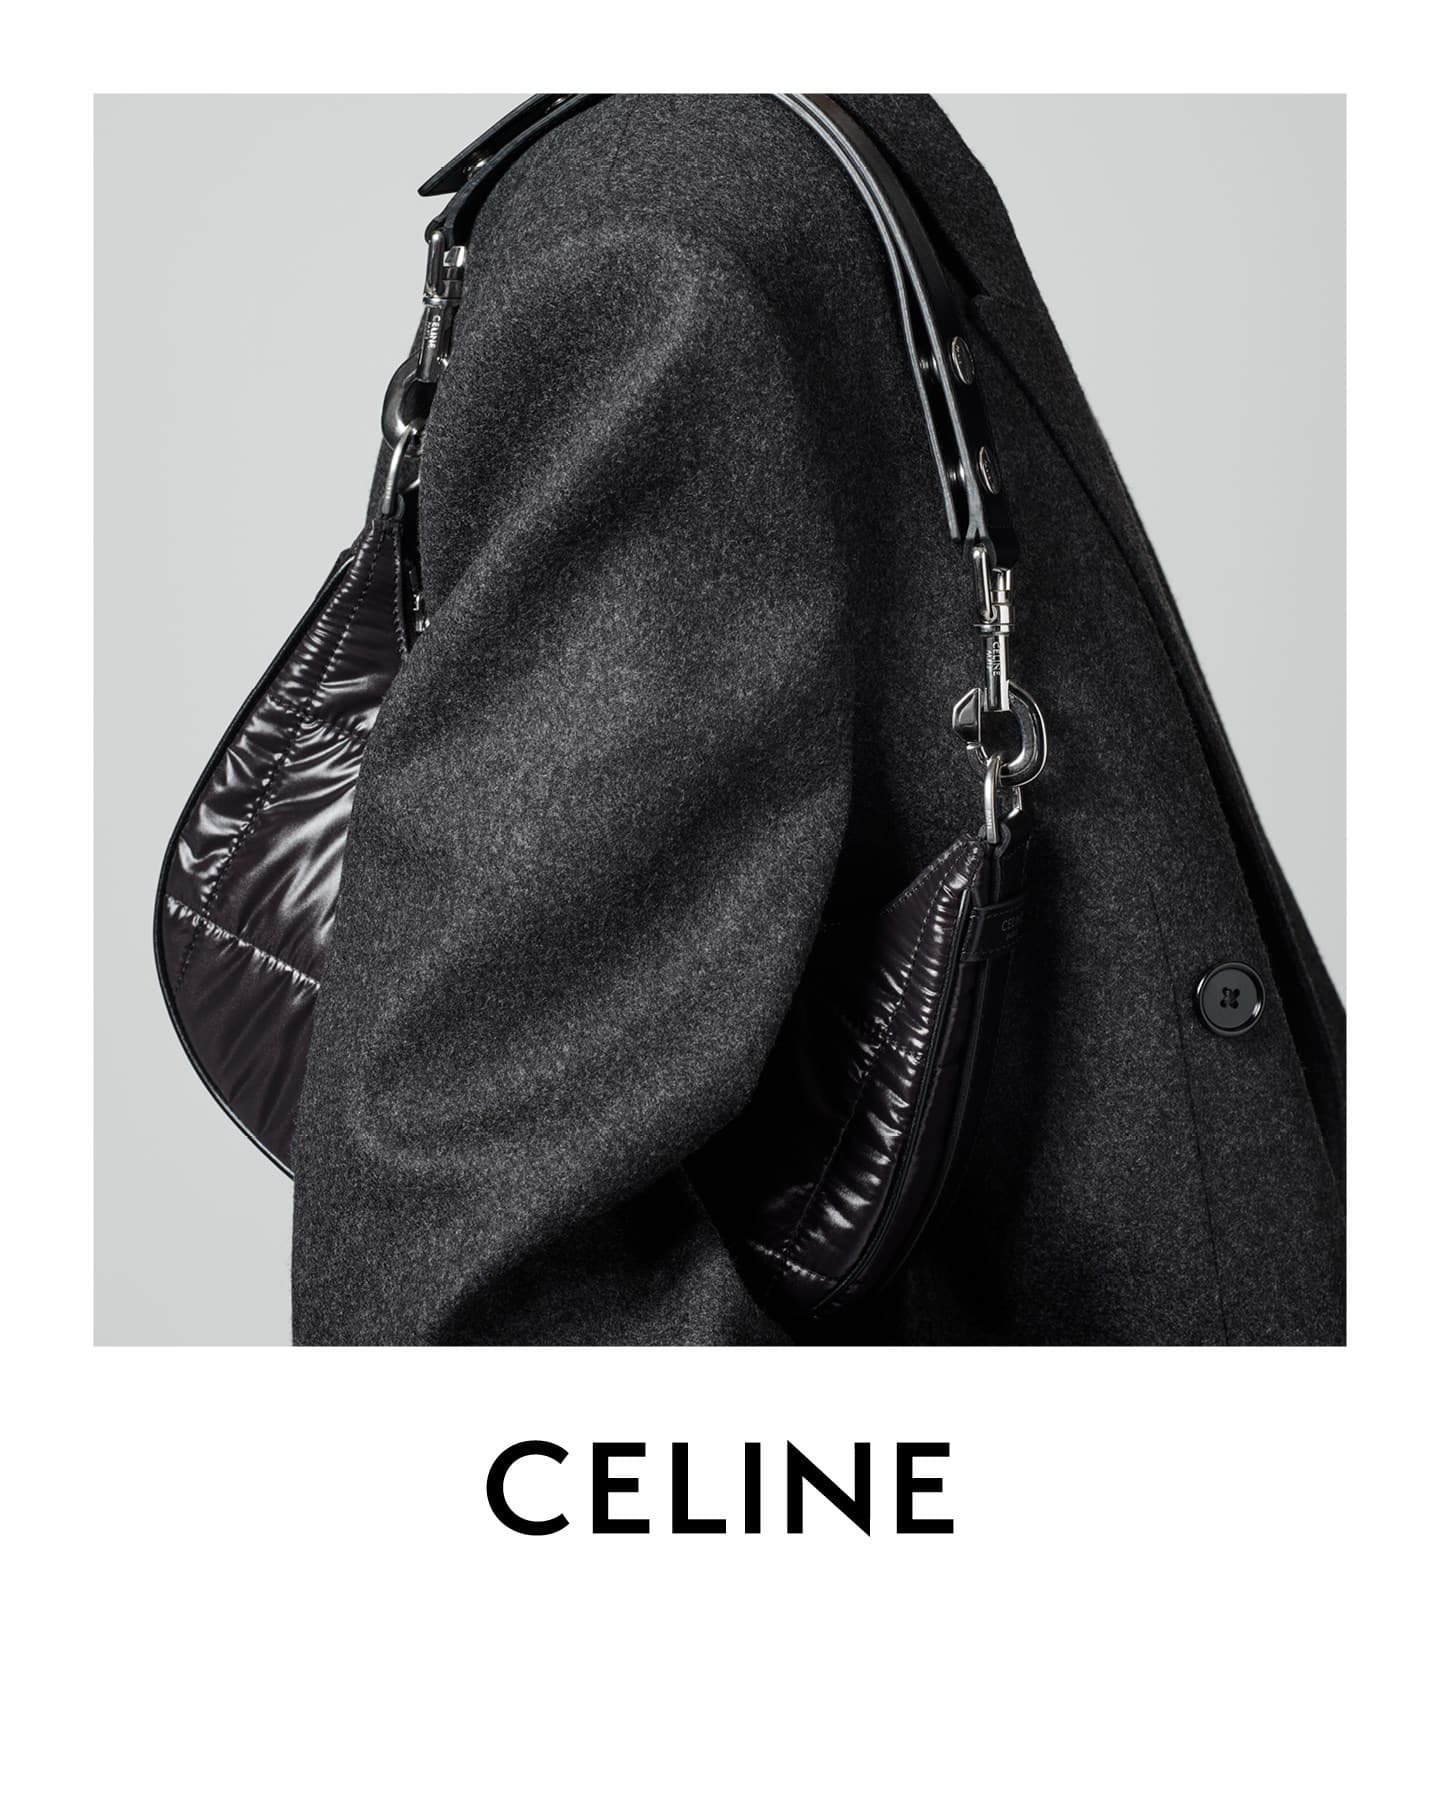 Celine Fall 2021 Ad Campaign | The Impression